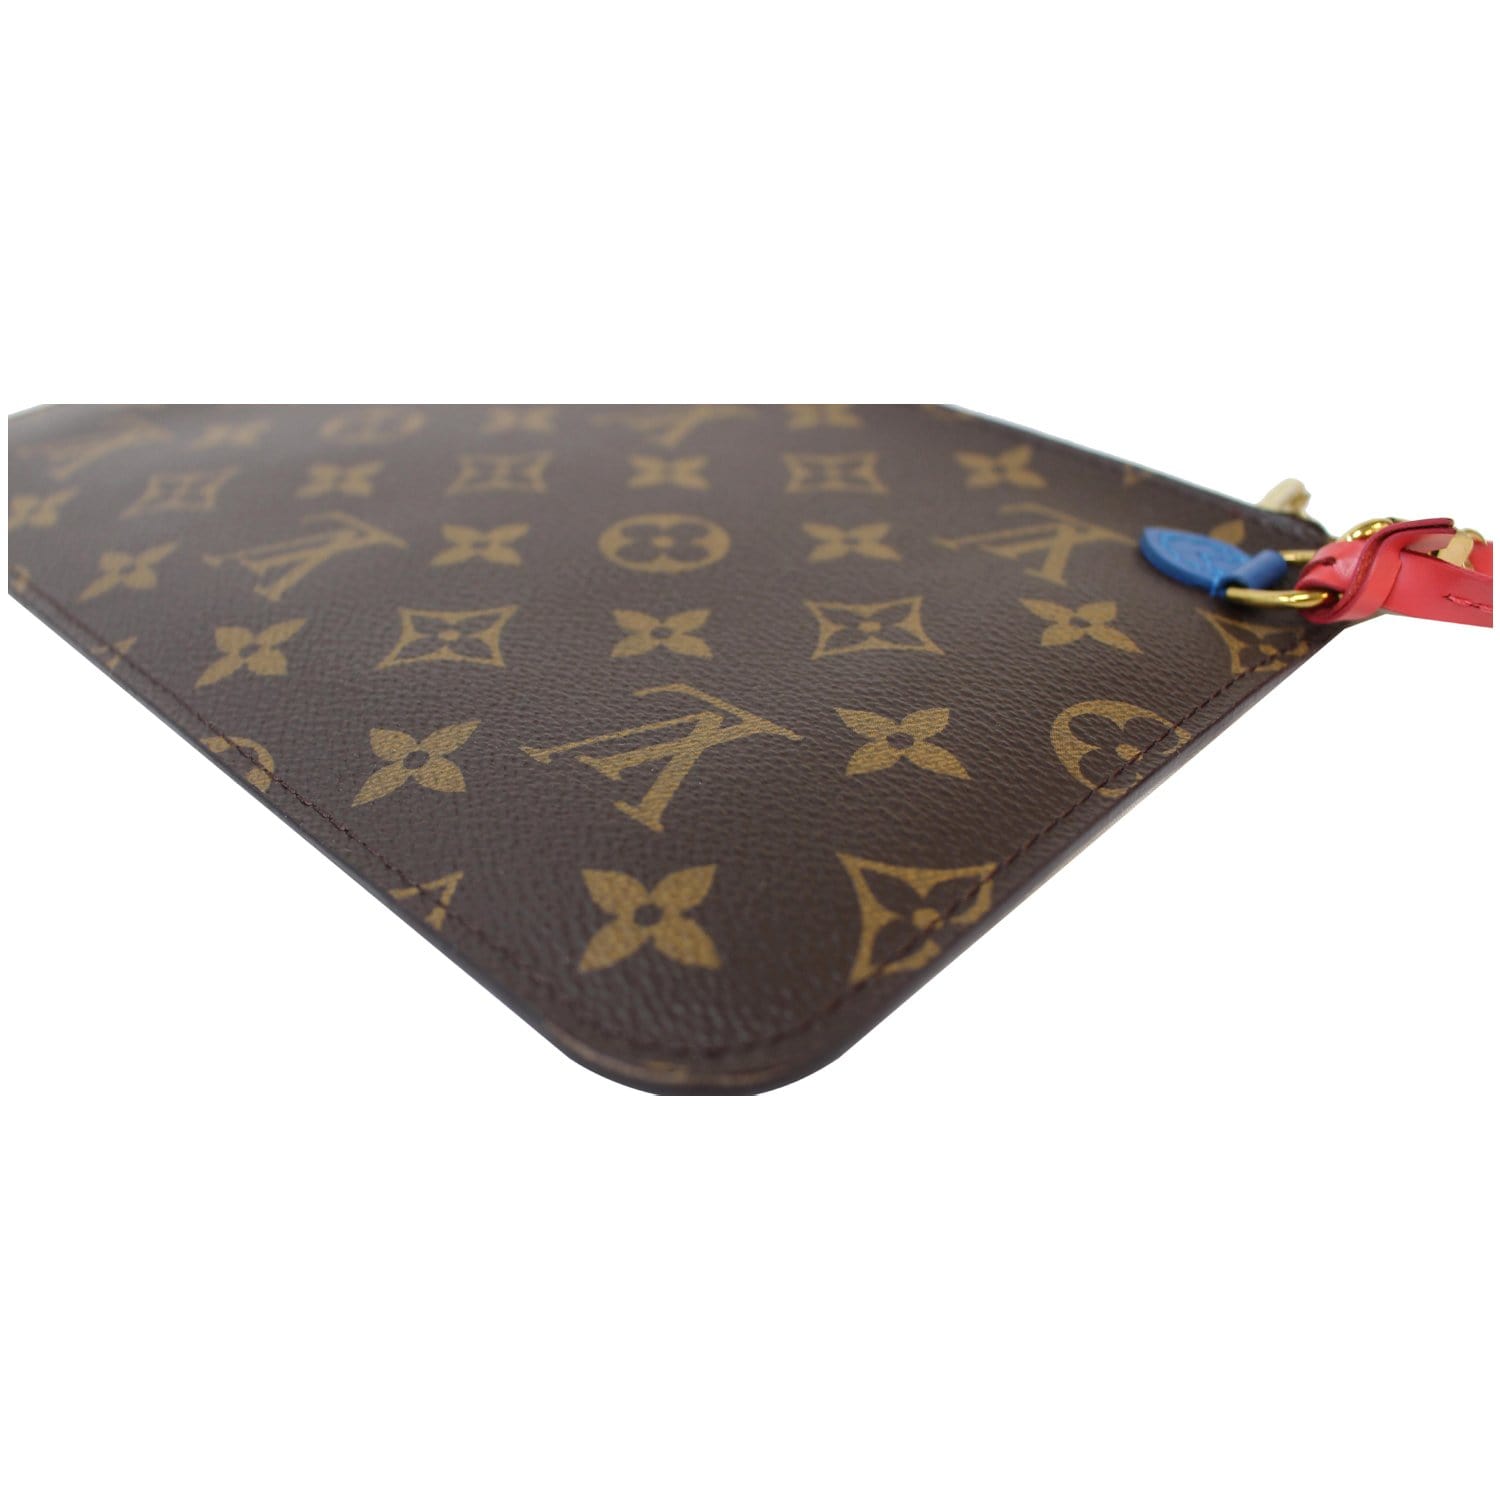 Louis Vuitton Neverfull MM Totem Monogram Canvas Bag